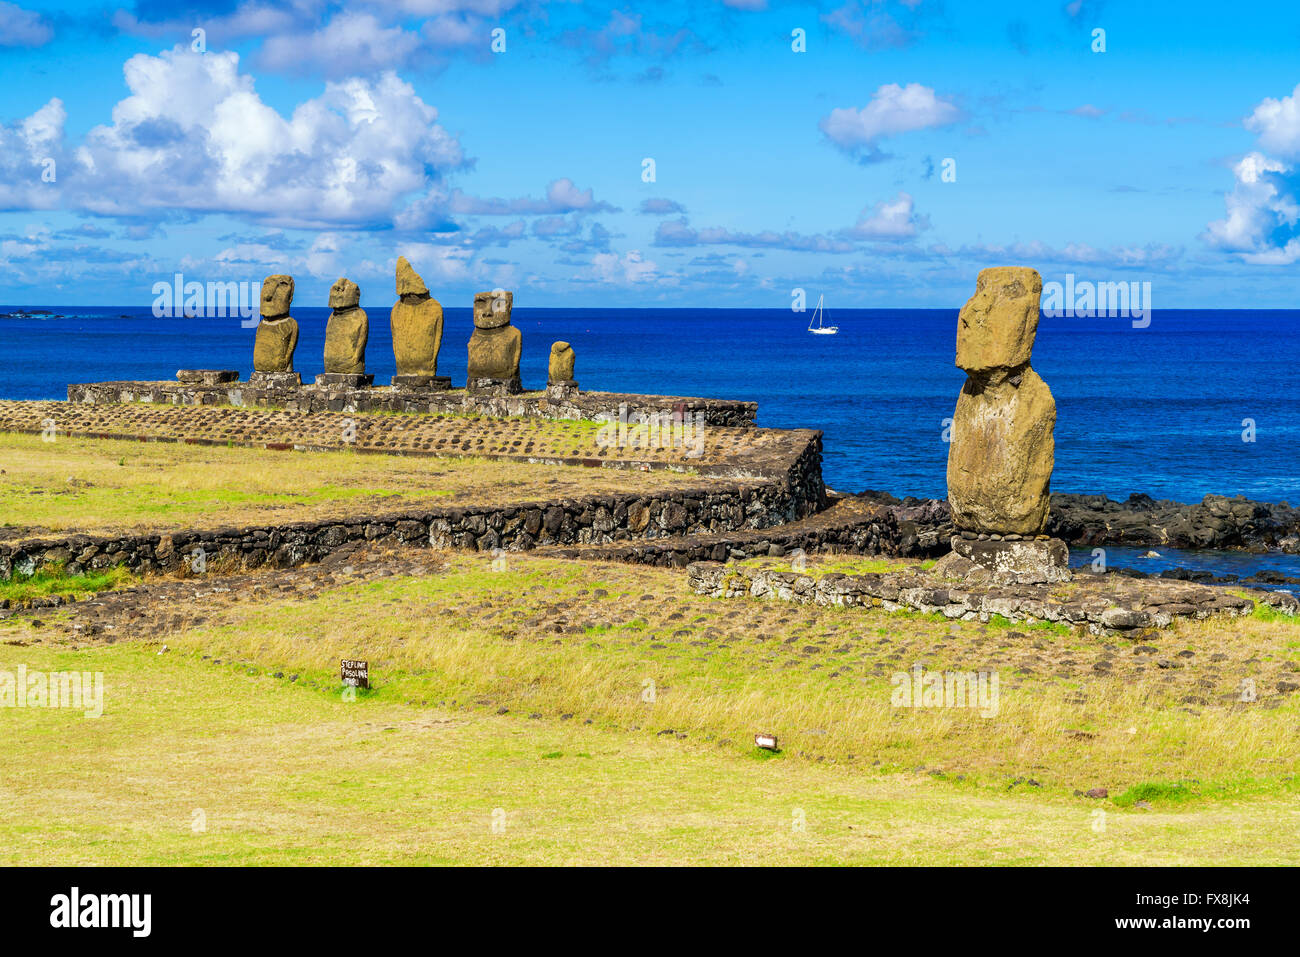 Ahu Tahai, Ahu Vai Uri e Oceano Pacifico presso Tahat complesso archeologico, Isola di Pasqua, Cile Foto Stock